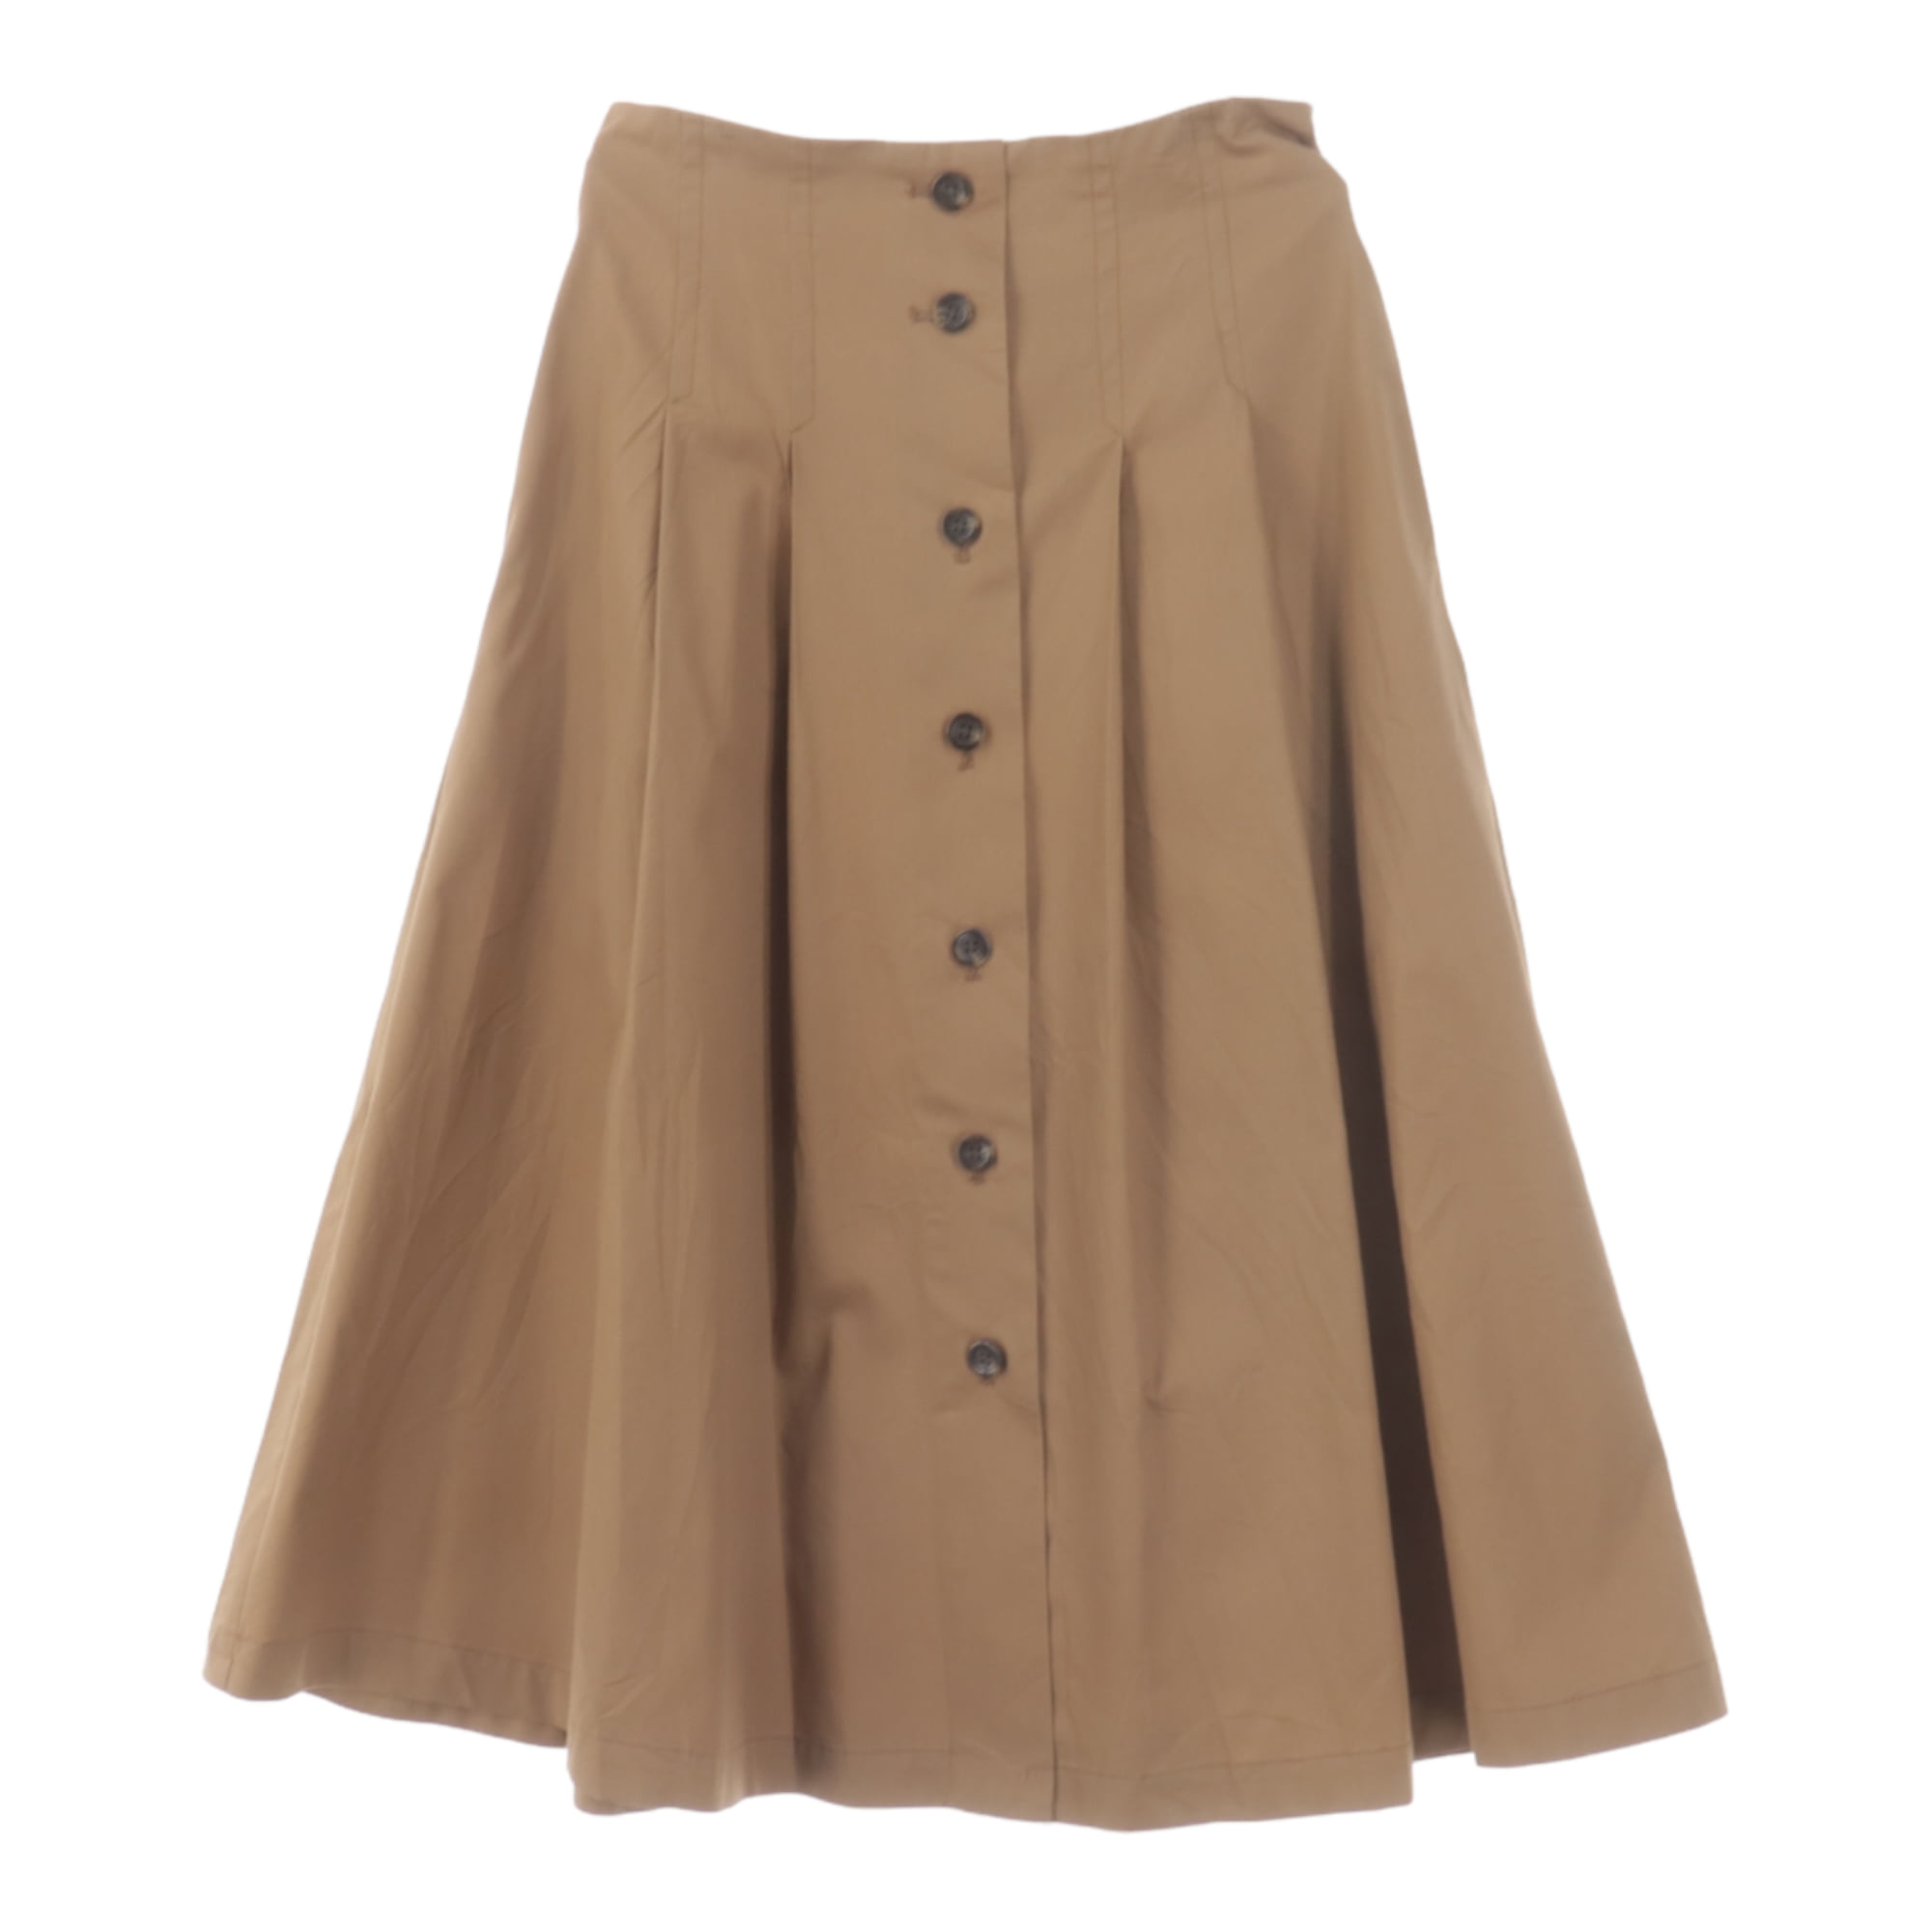 American Holic,Skirt